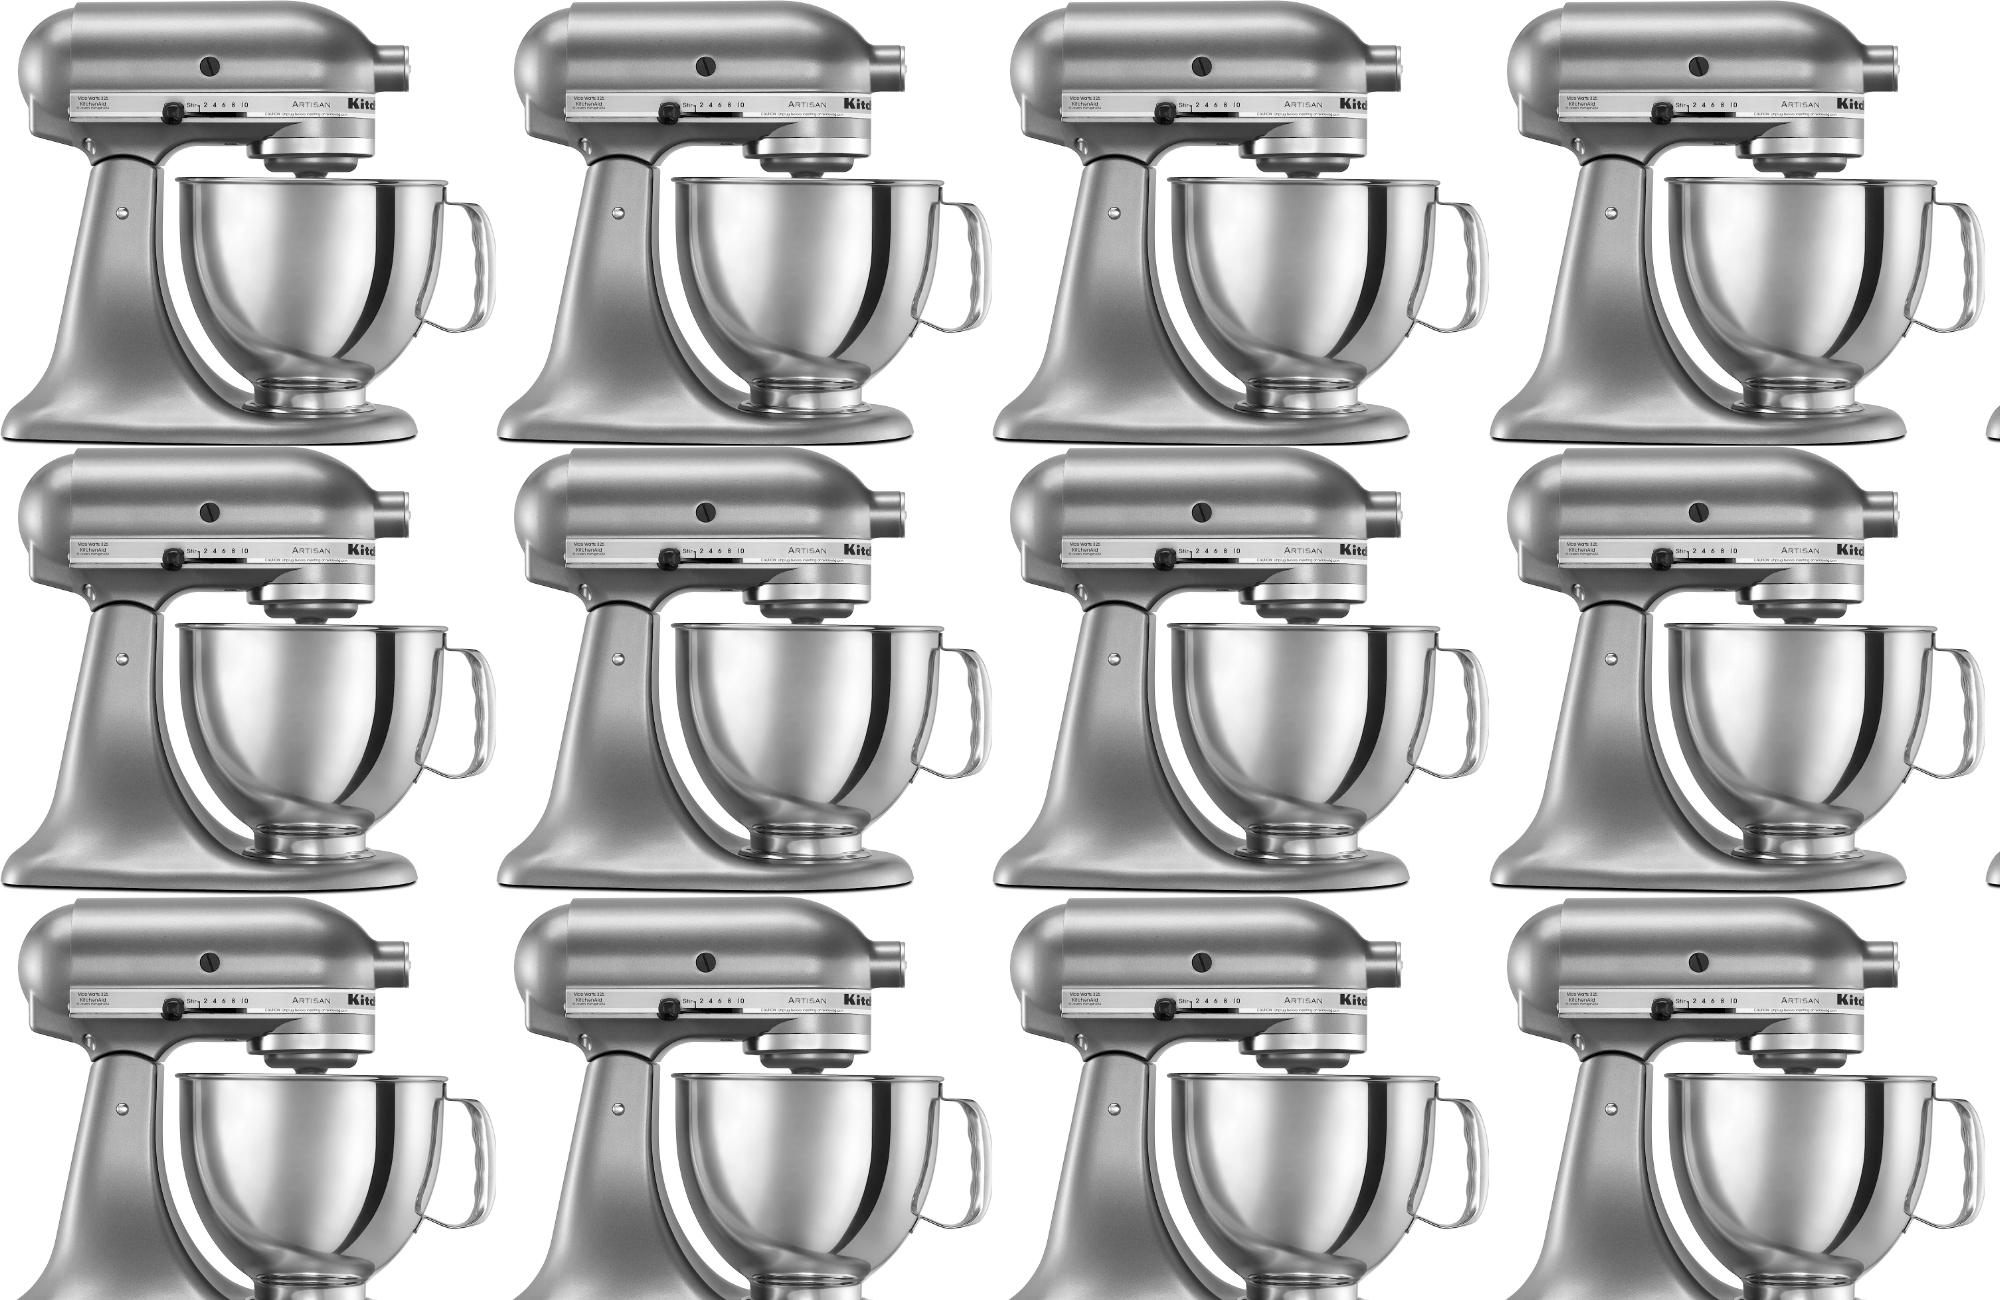 KitchenAid mixers on sale: Save on so many models